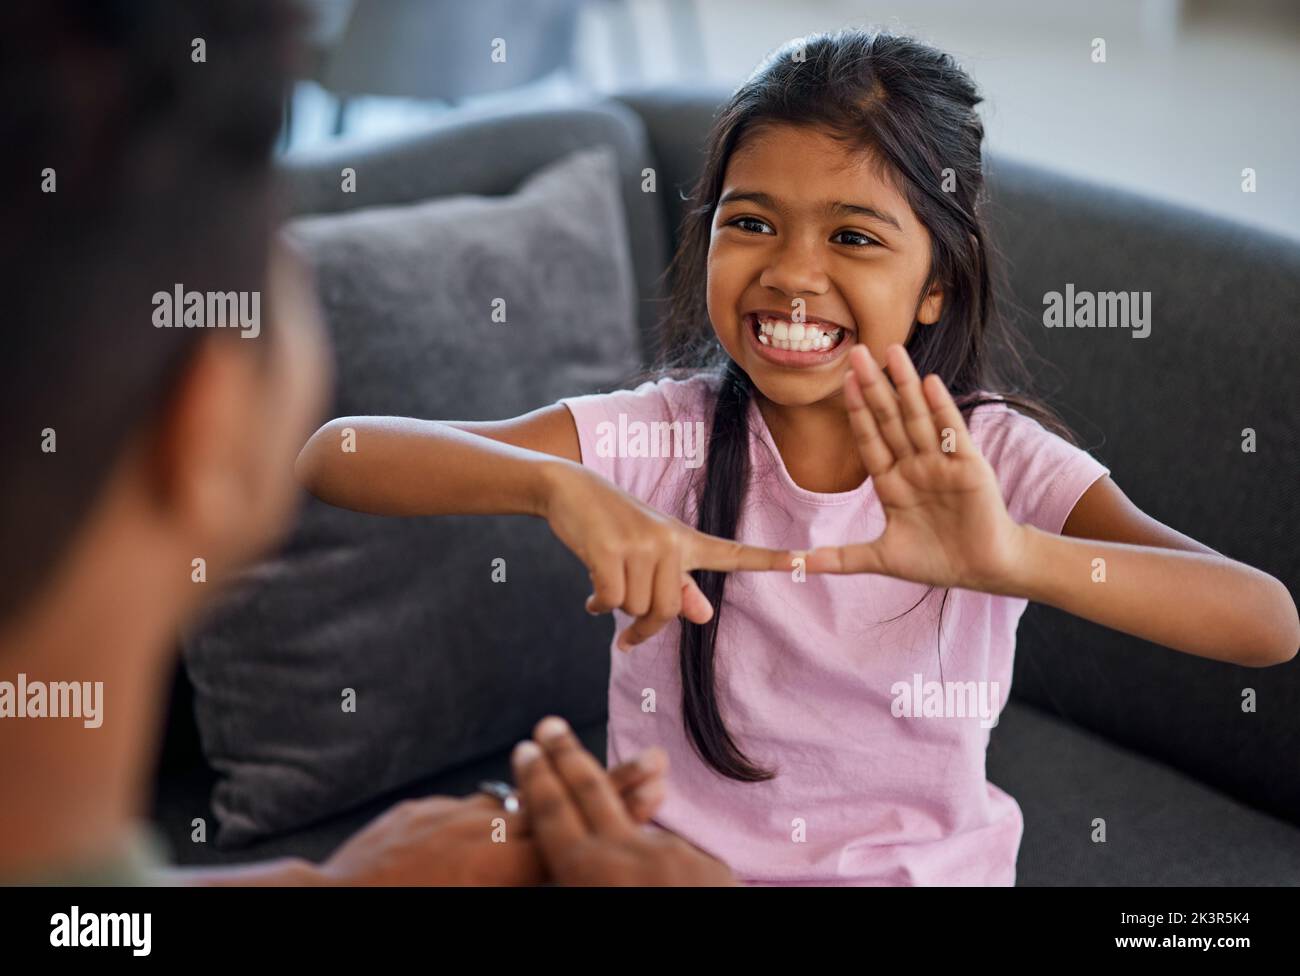 children using sign language